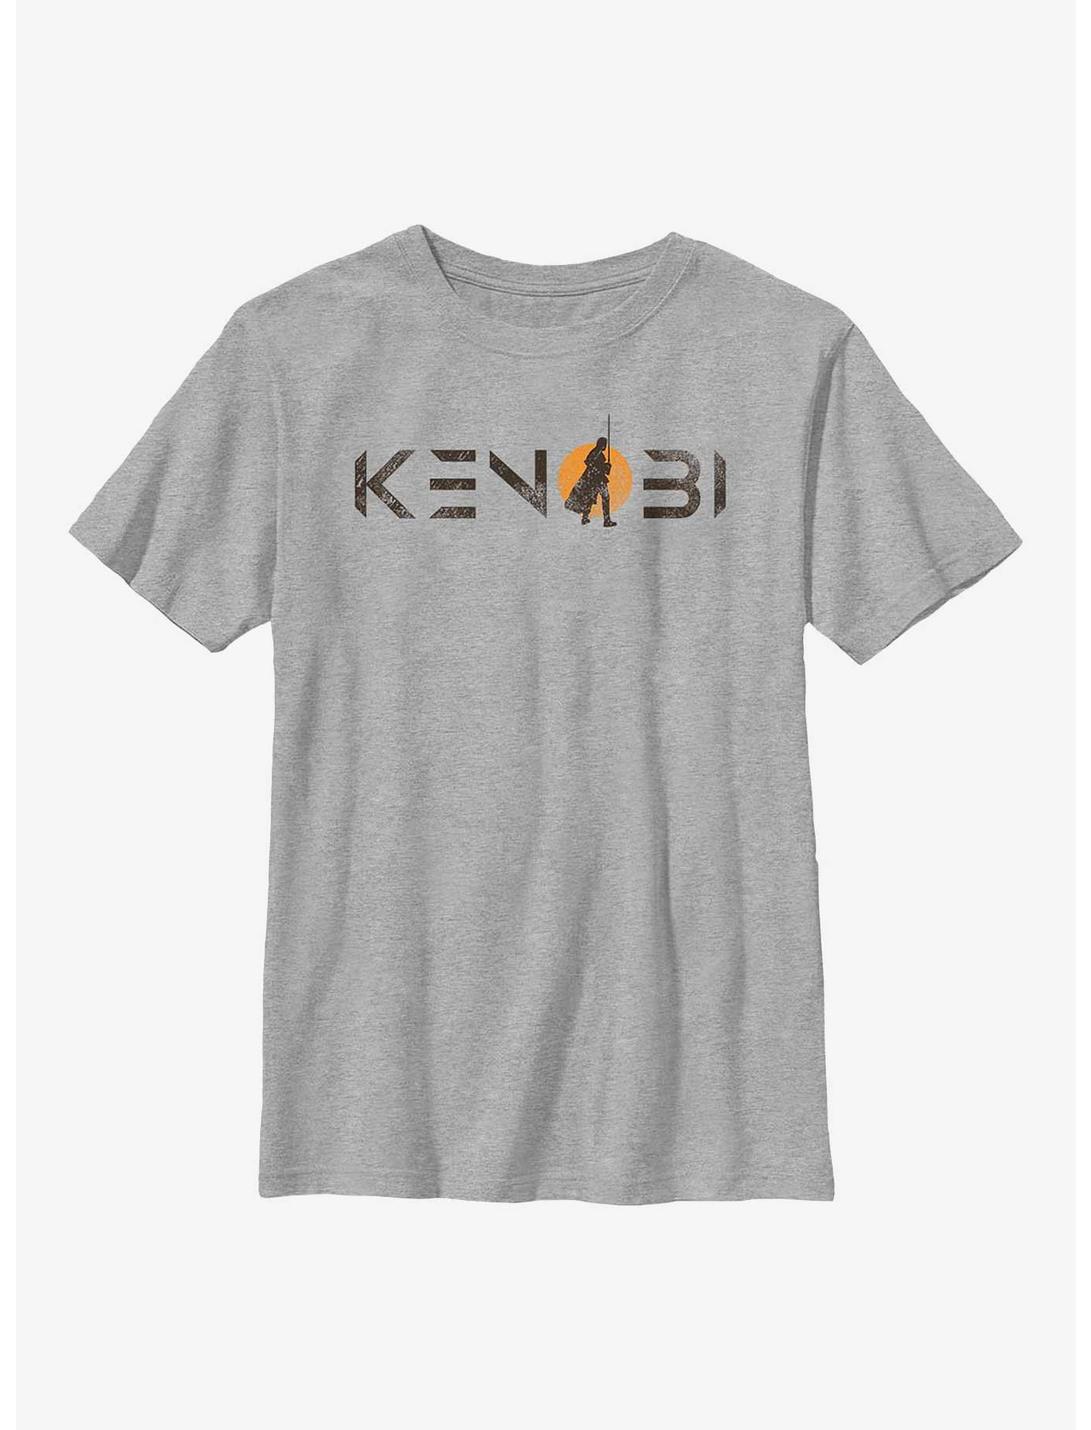 Star Wars Obi-Wan Kenobi Single Sun Logo Youth T-Shirt, ATH HTR, hi-res